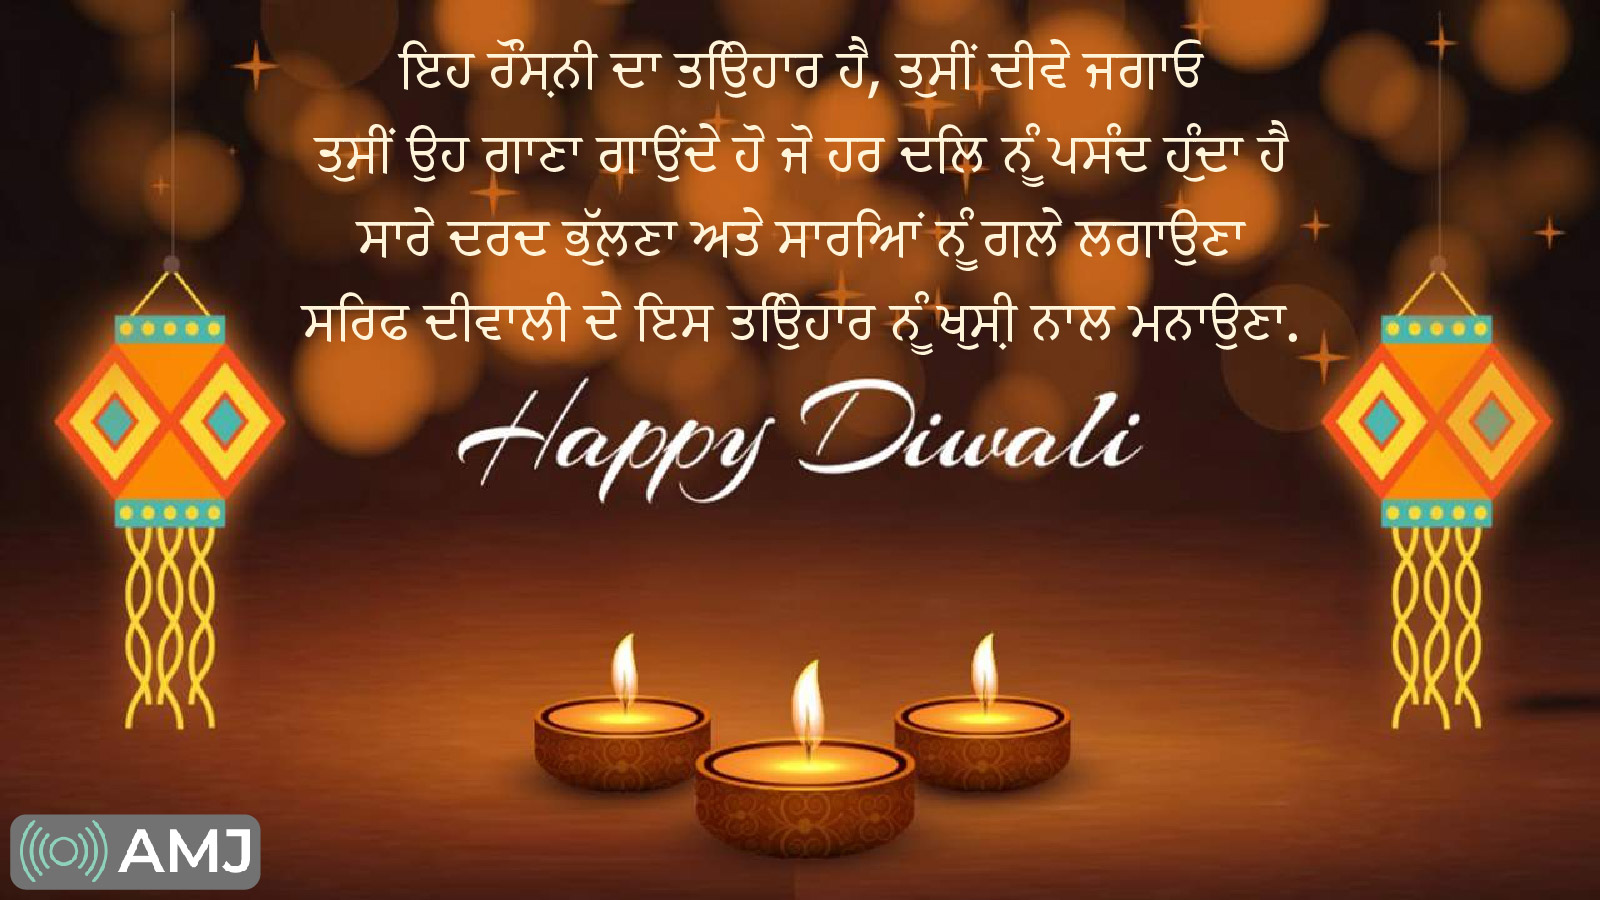 Diwali Wishes in Punjabi